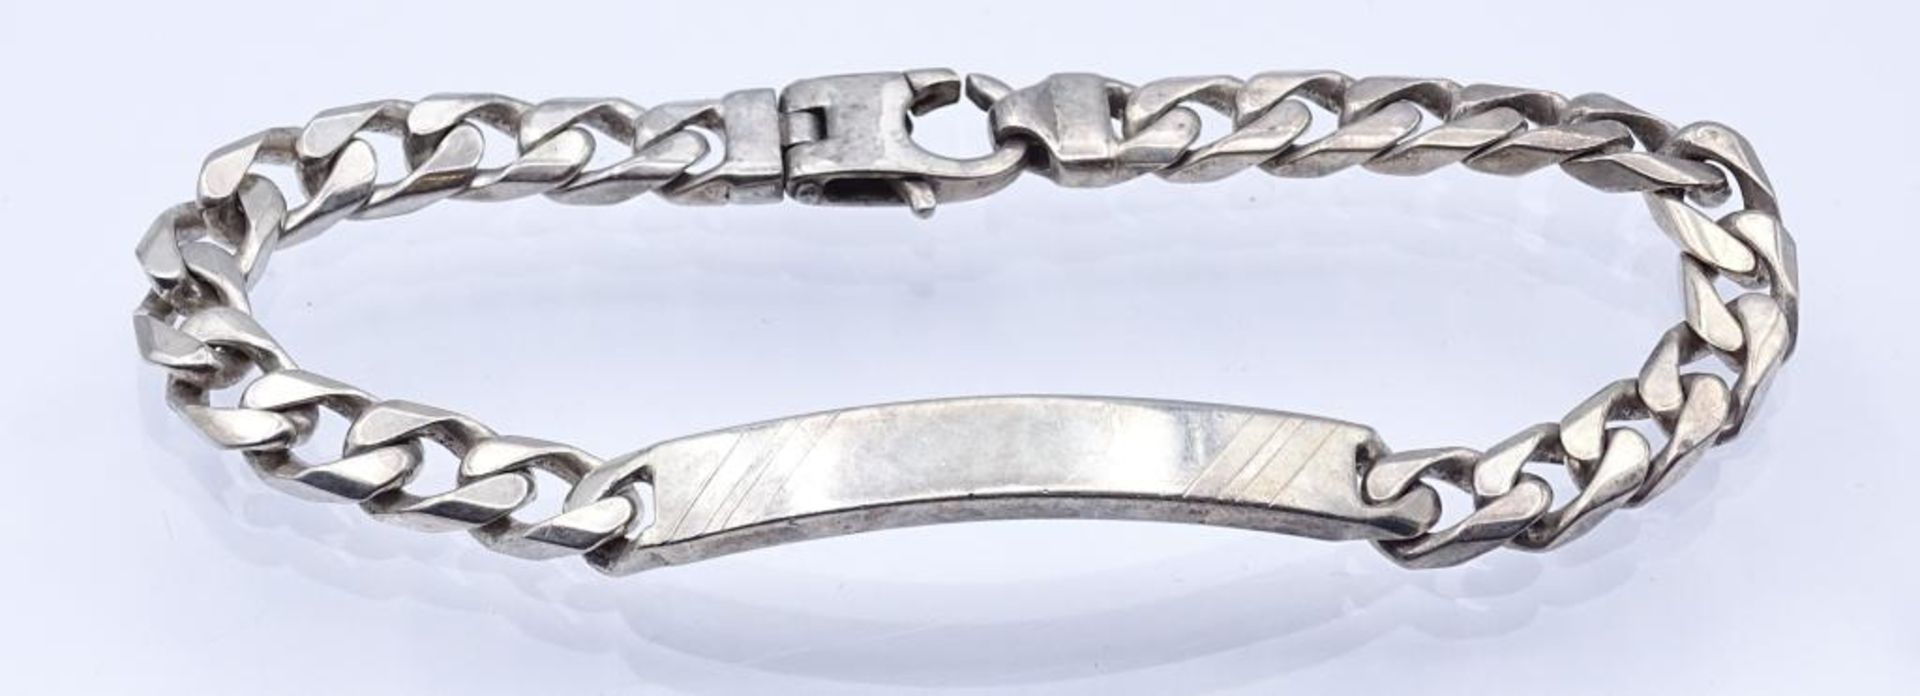 Identitätsband Sterling Silber, Gravurplatte nicht beschriftet,Silber 925/000,L-22cm,b-7mm,30,